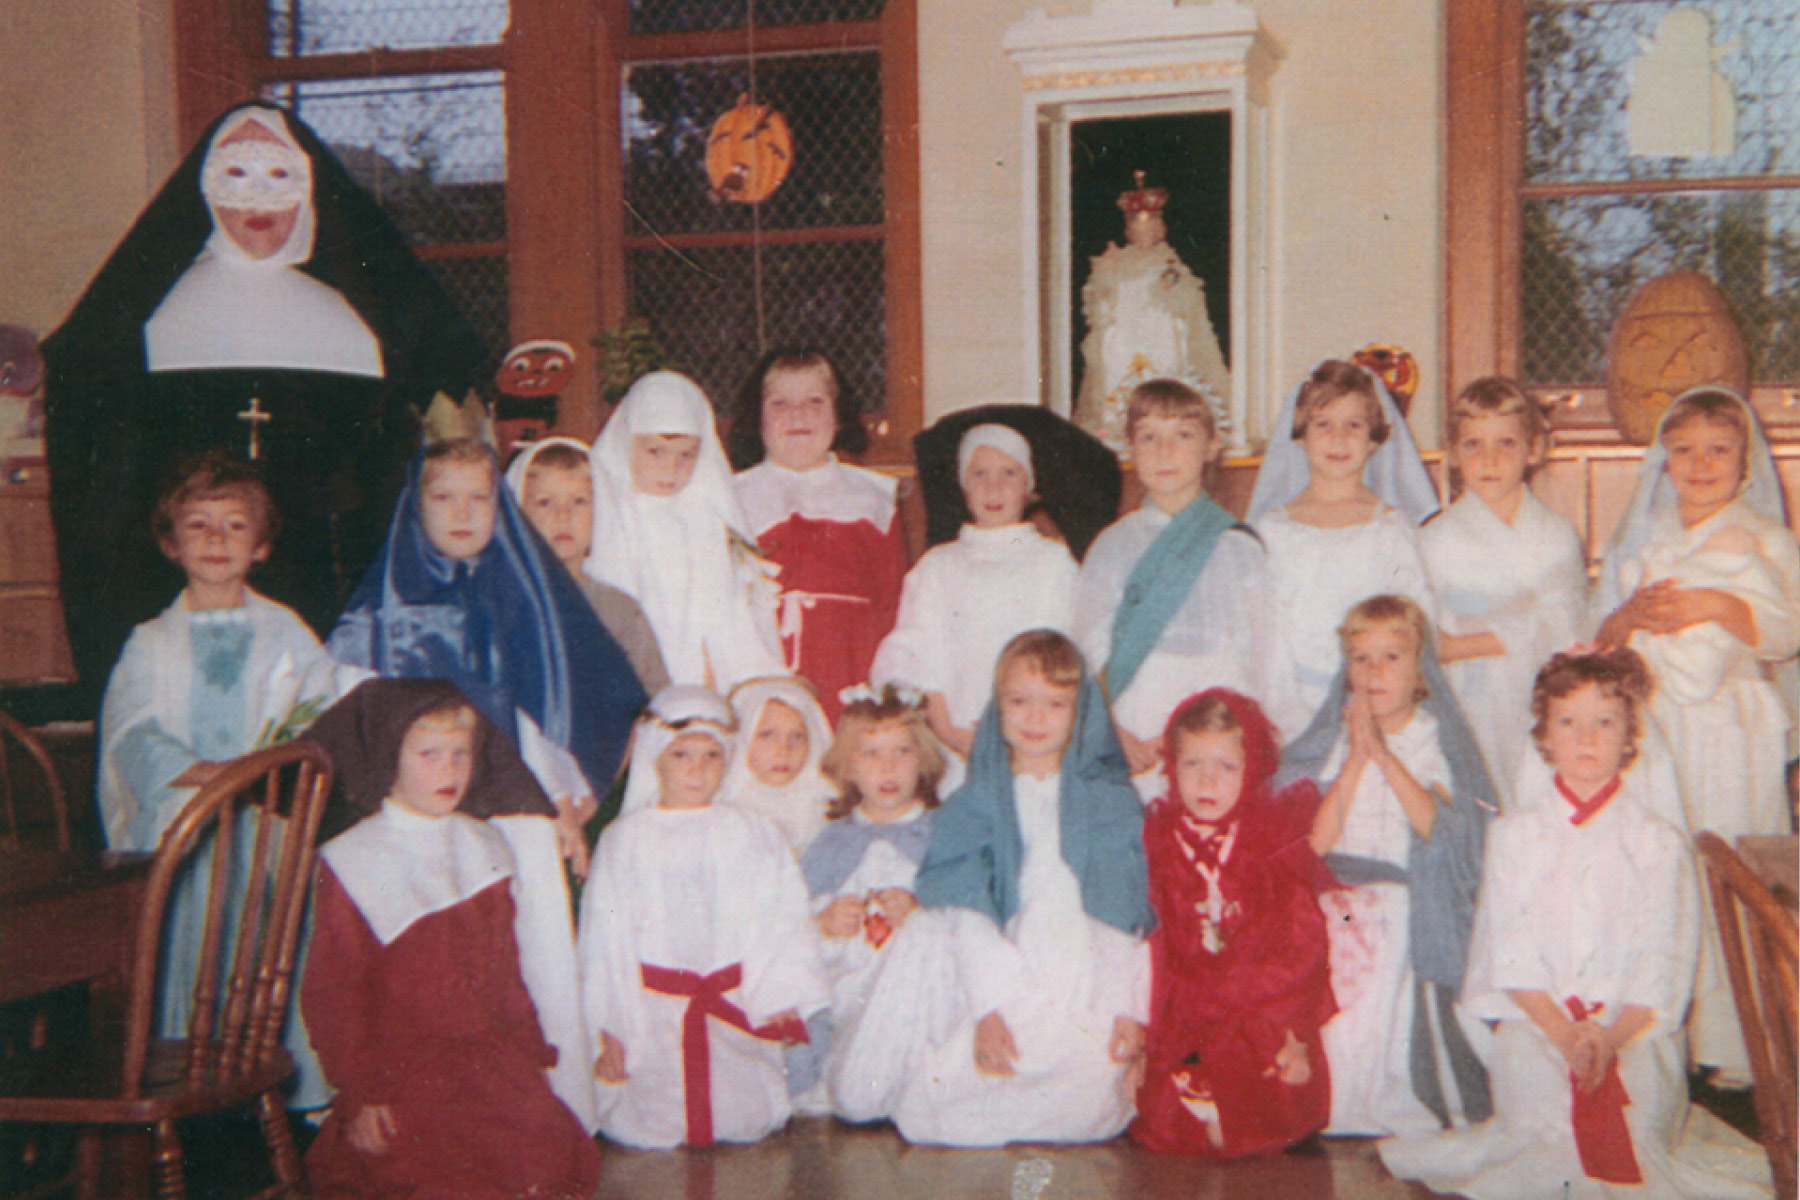 Kindergarten - Dressed as Patron Saint for Halloween